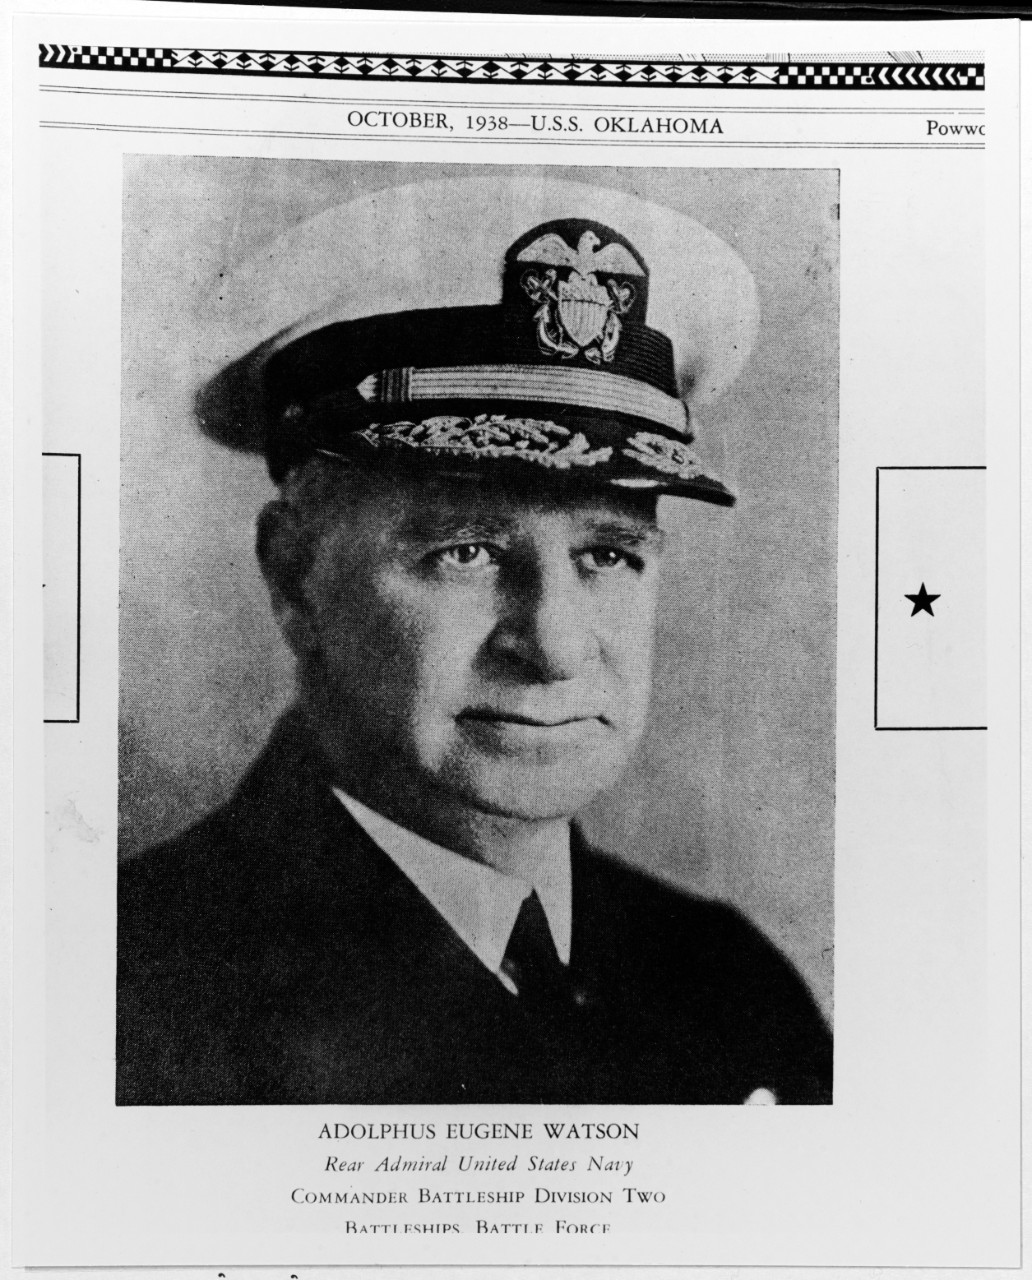 Rear Admiral Adolphus Eugene Watson, USN